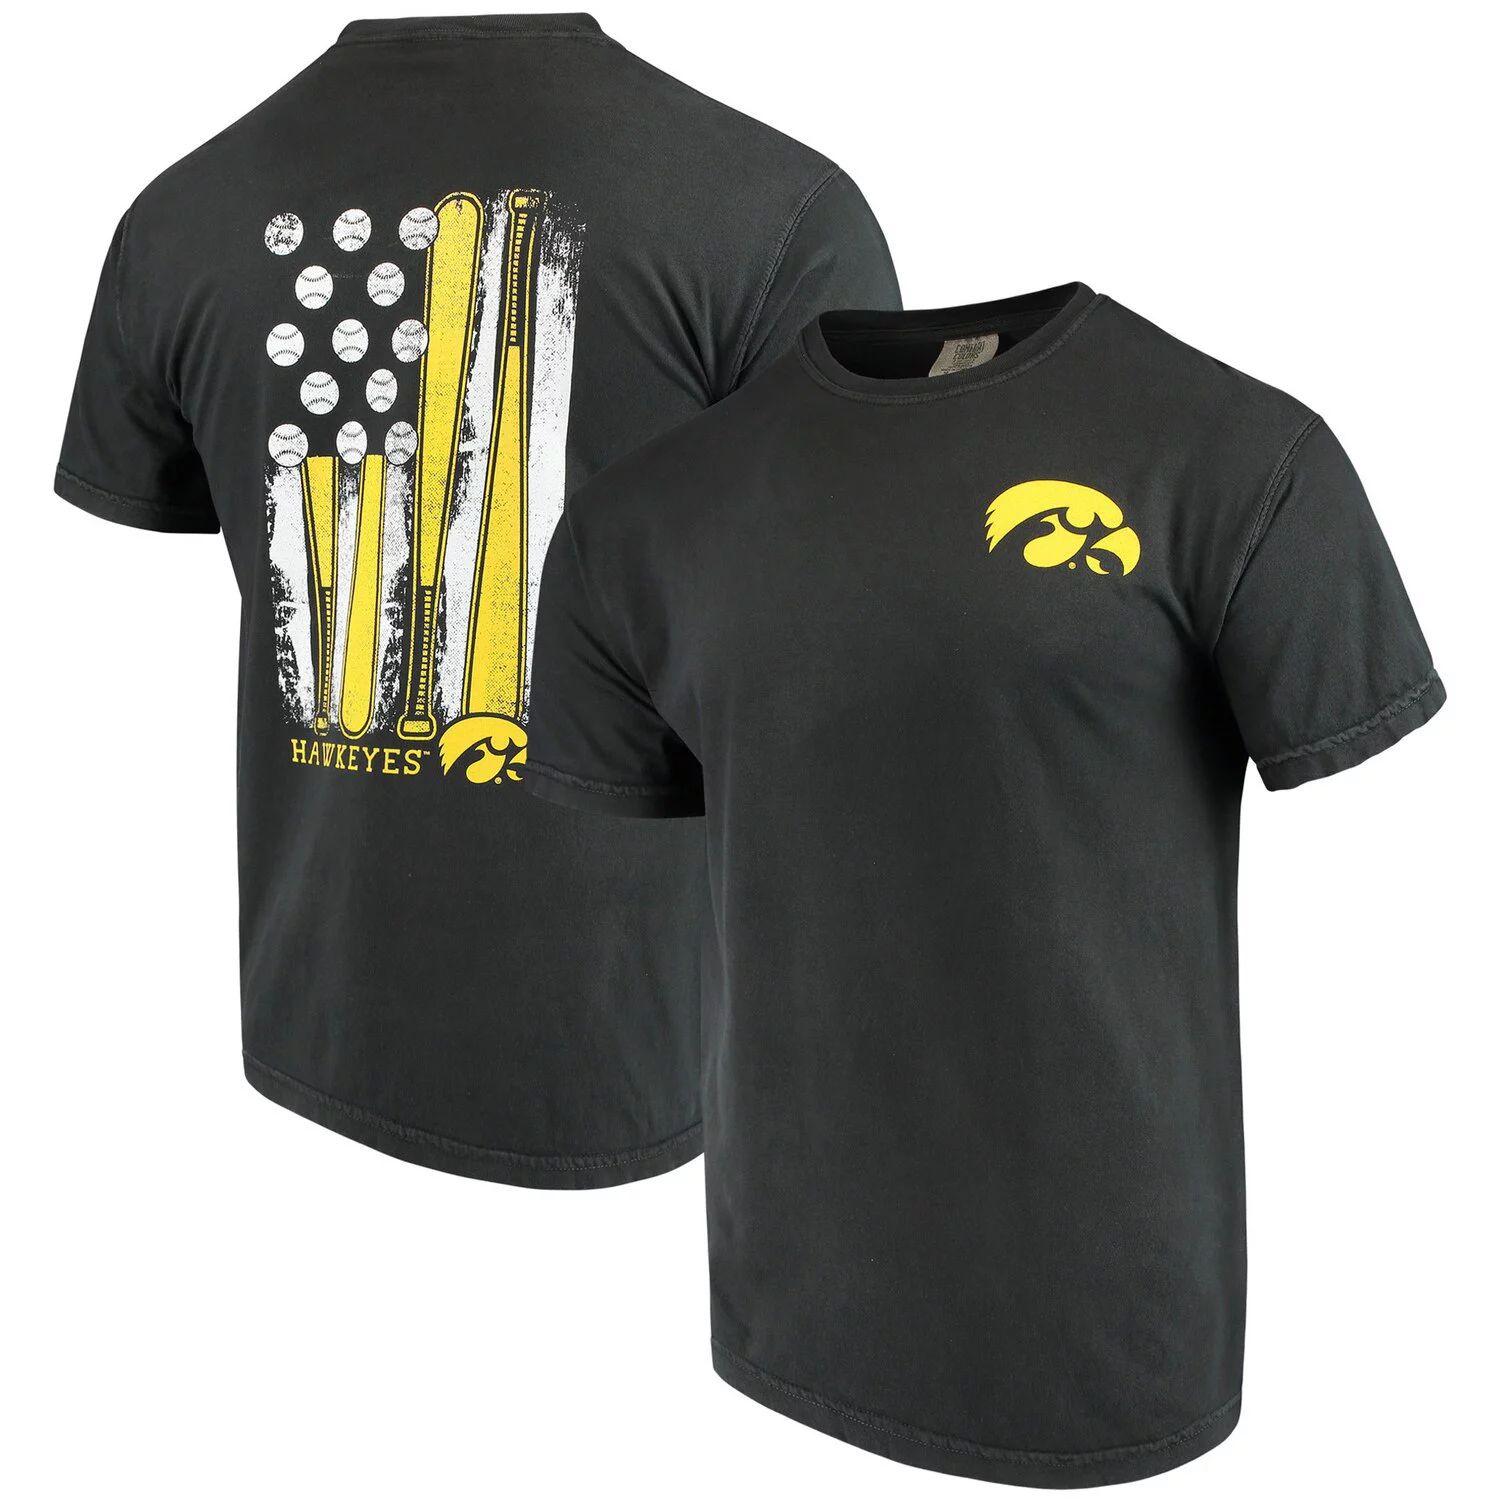 Мужская черная футболка с бейсбольным флагом Iowa Hawkeyes комфортных цветов